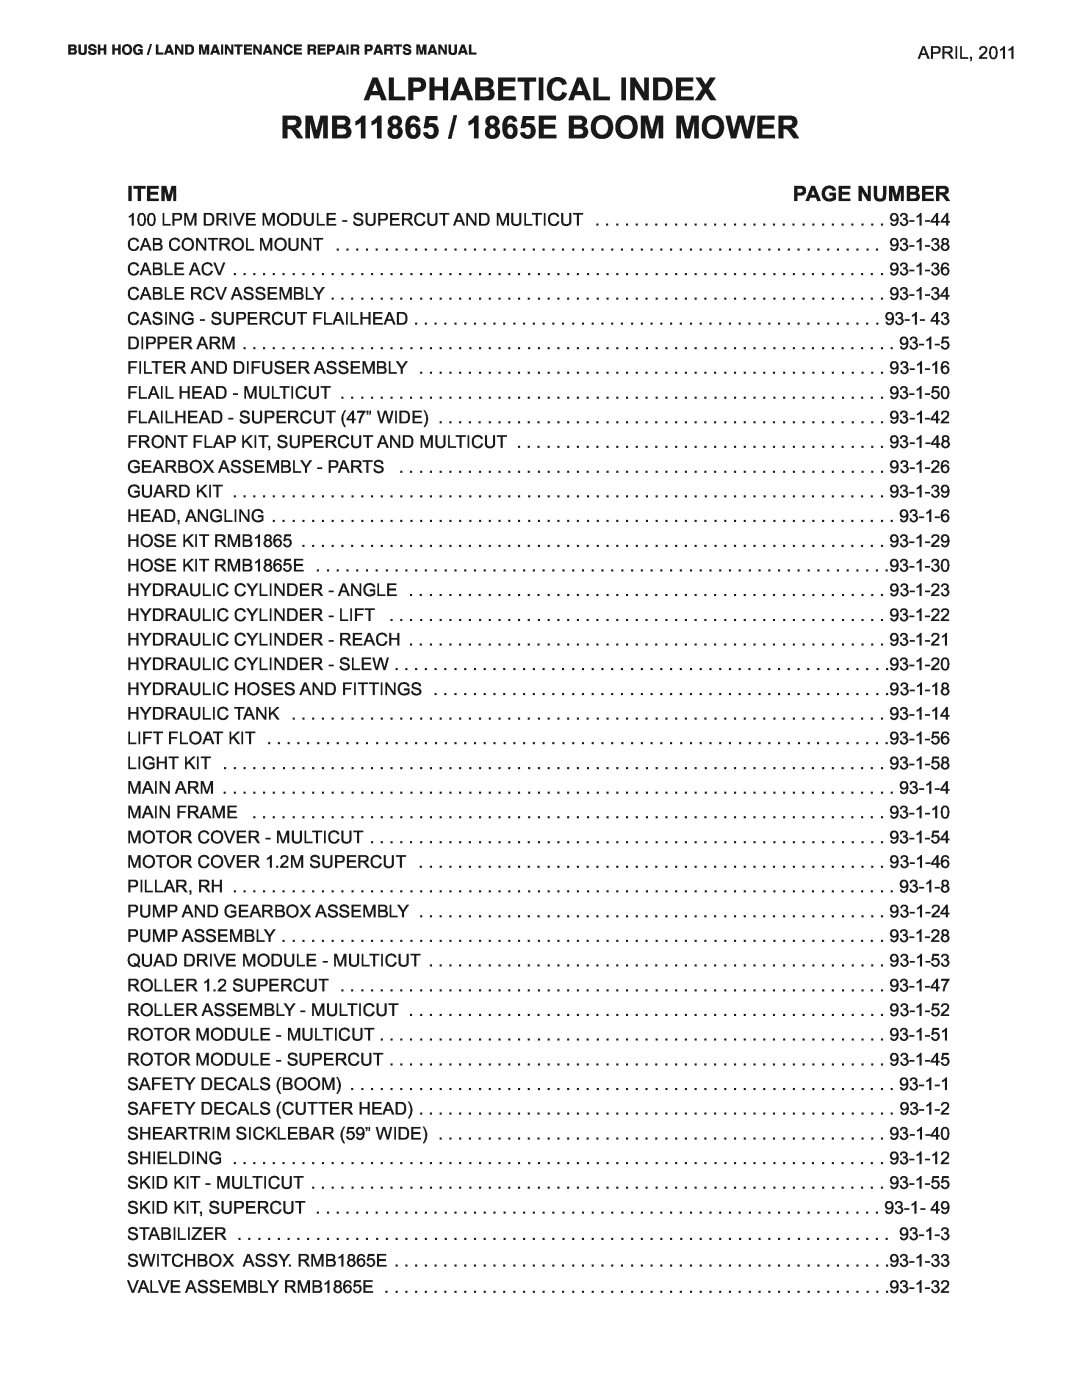 Bush Hog RMB1865E manual ALPHABETICAL INDEX RMB11865 / 1865E BOOM MOWER, Page Number, April 